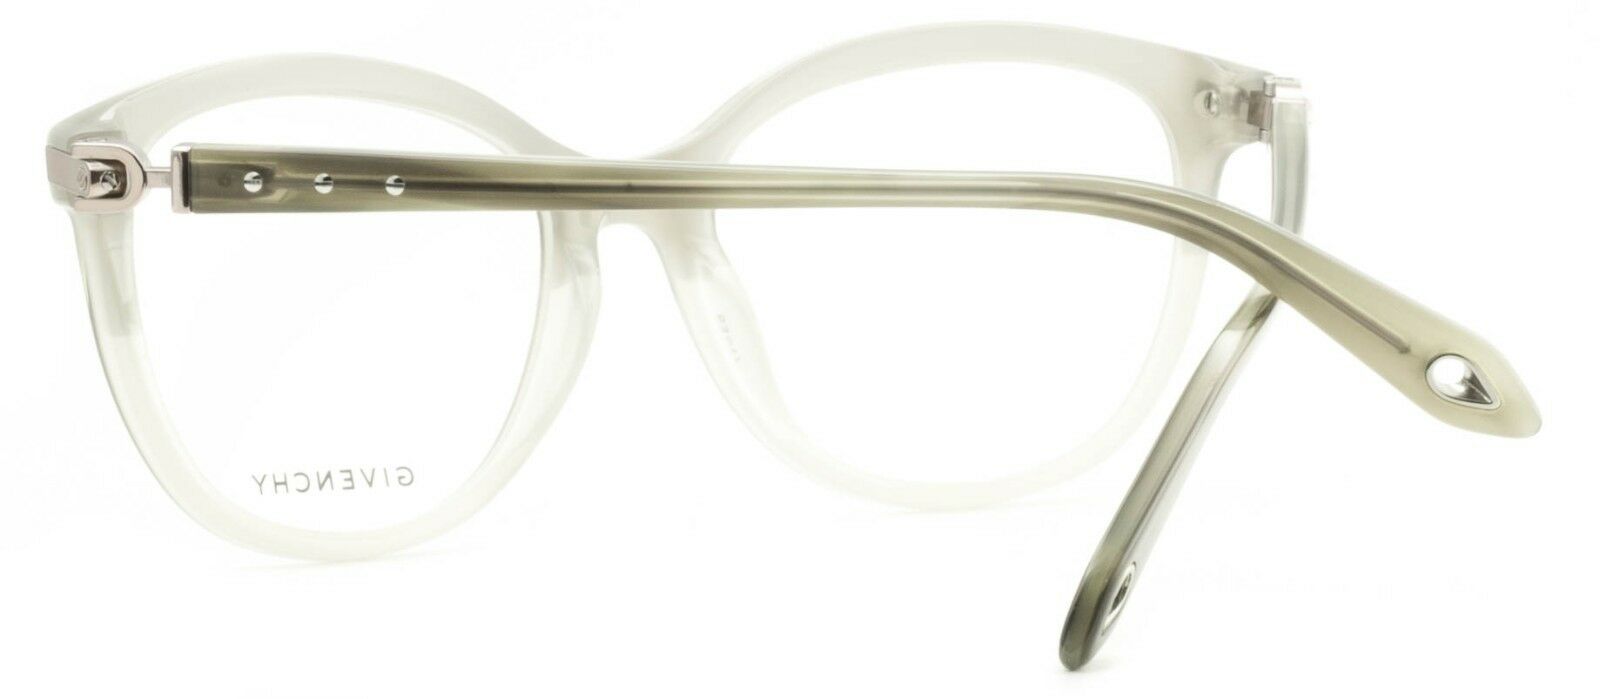 GIVENCHY VGV 907 COL 0ARL Eyewear FRAMES RX Optical Glasses Eyeglasses - New